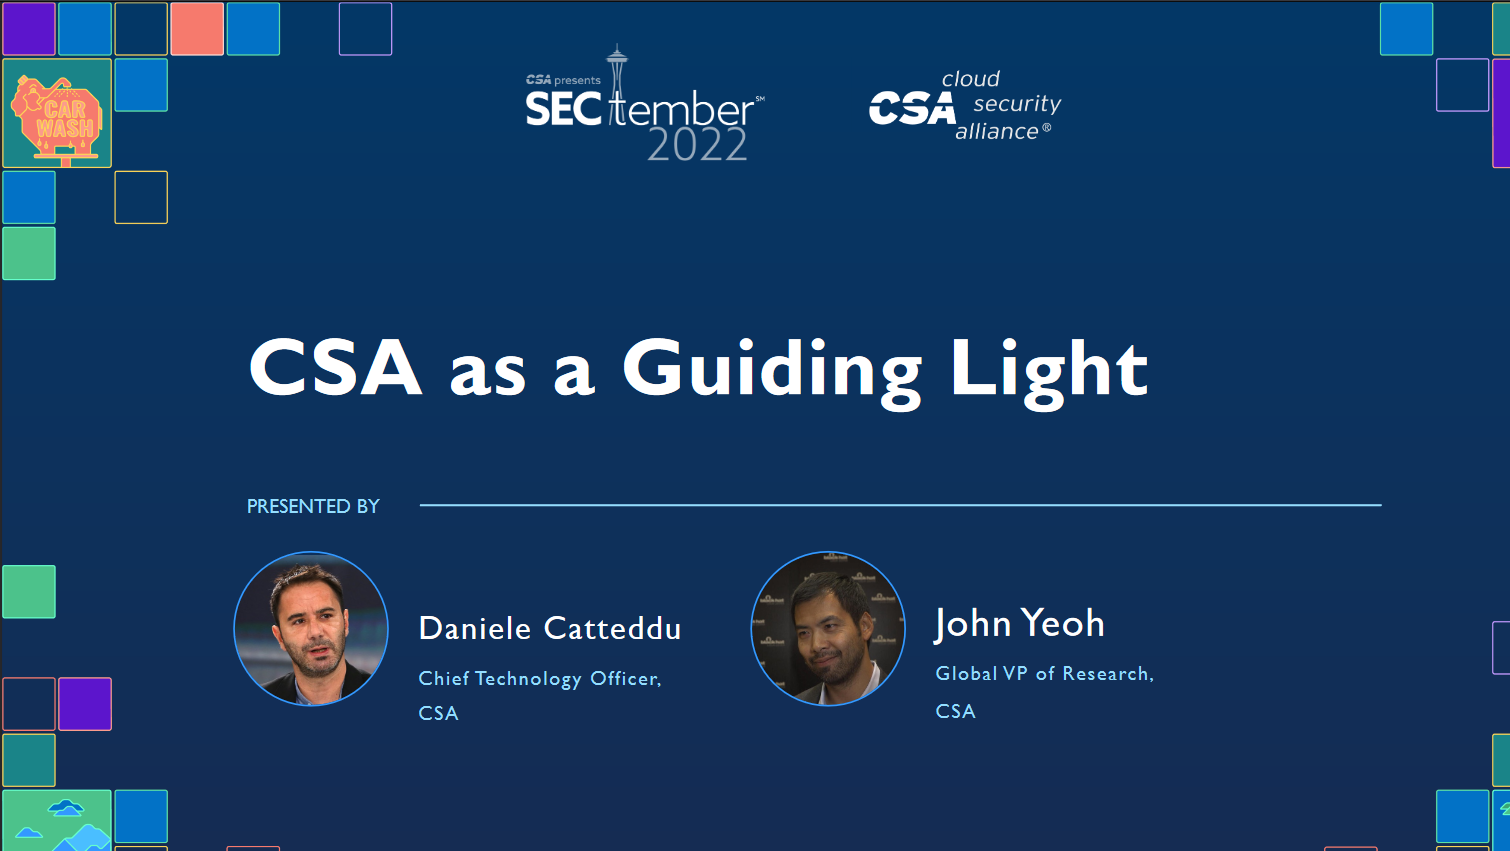  CSA as a Guiding Light to Cybersecurity